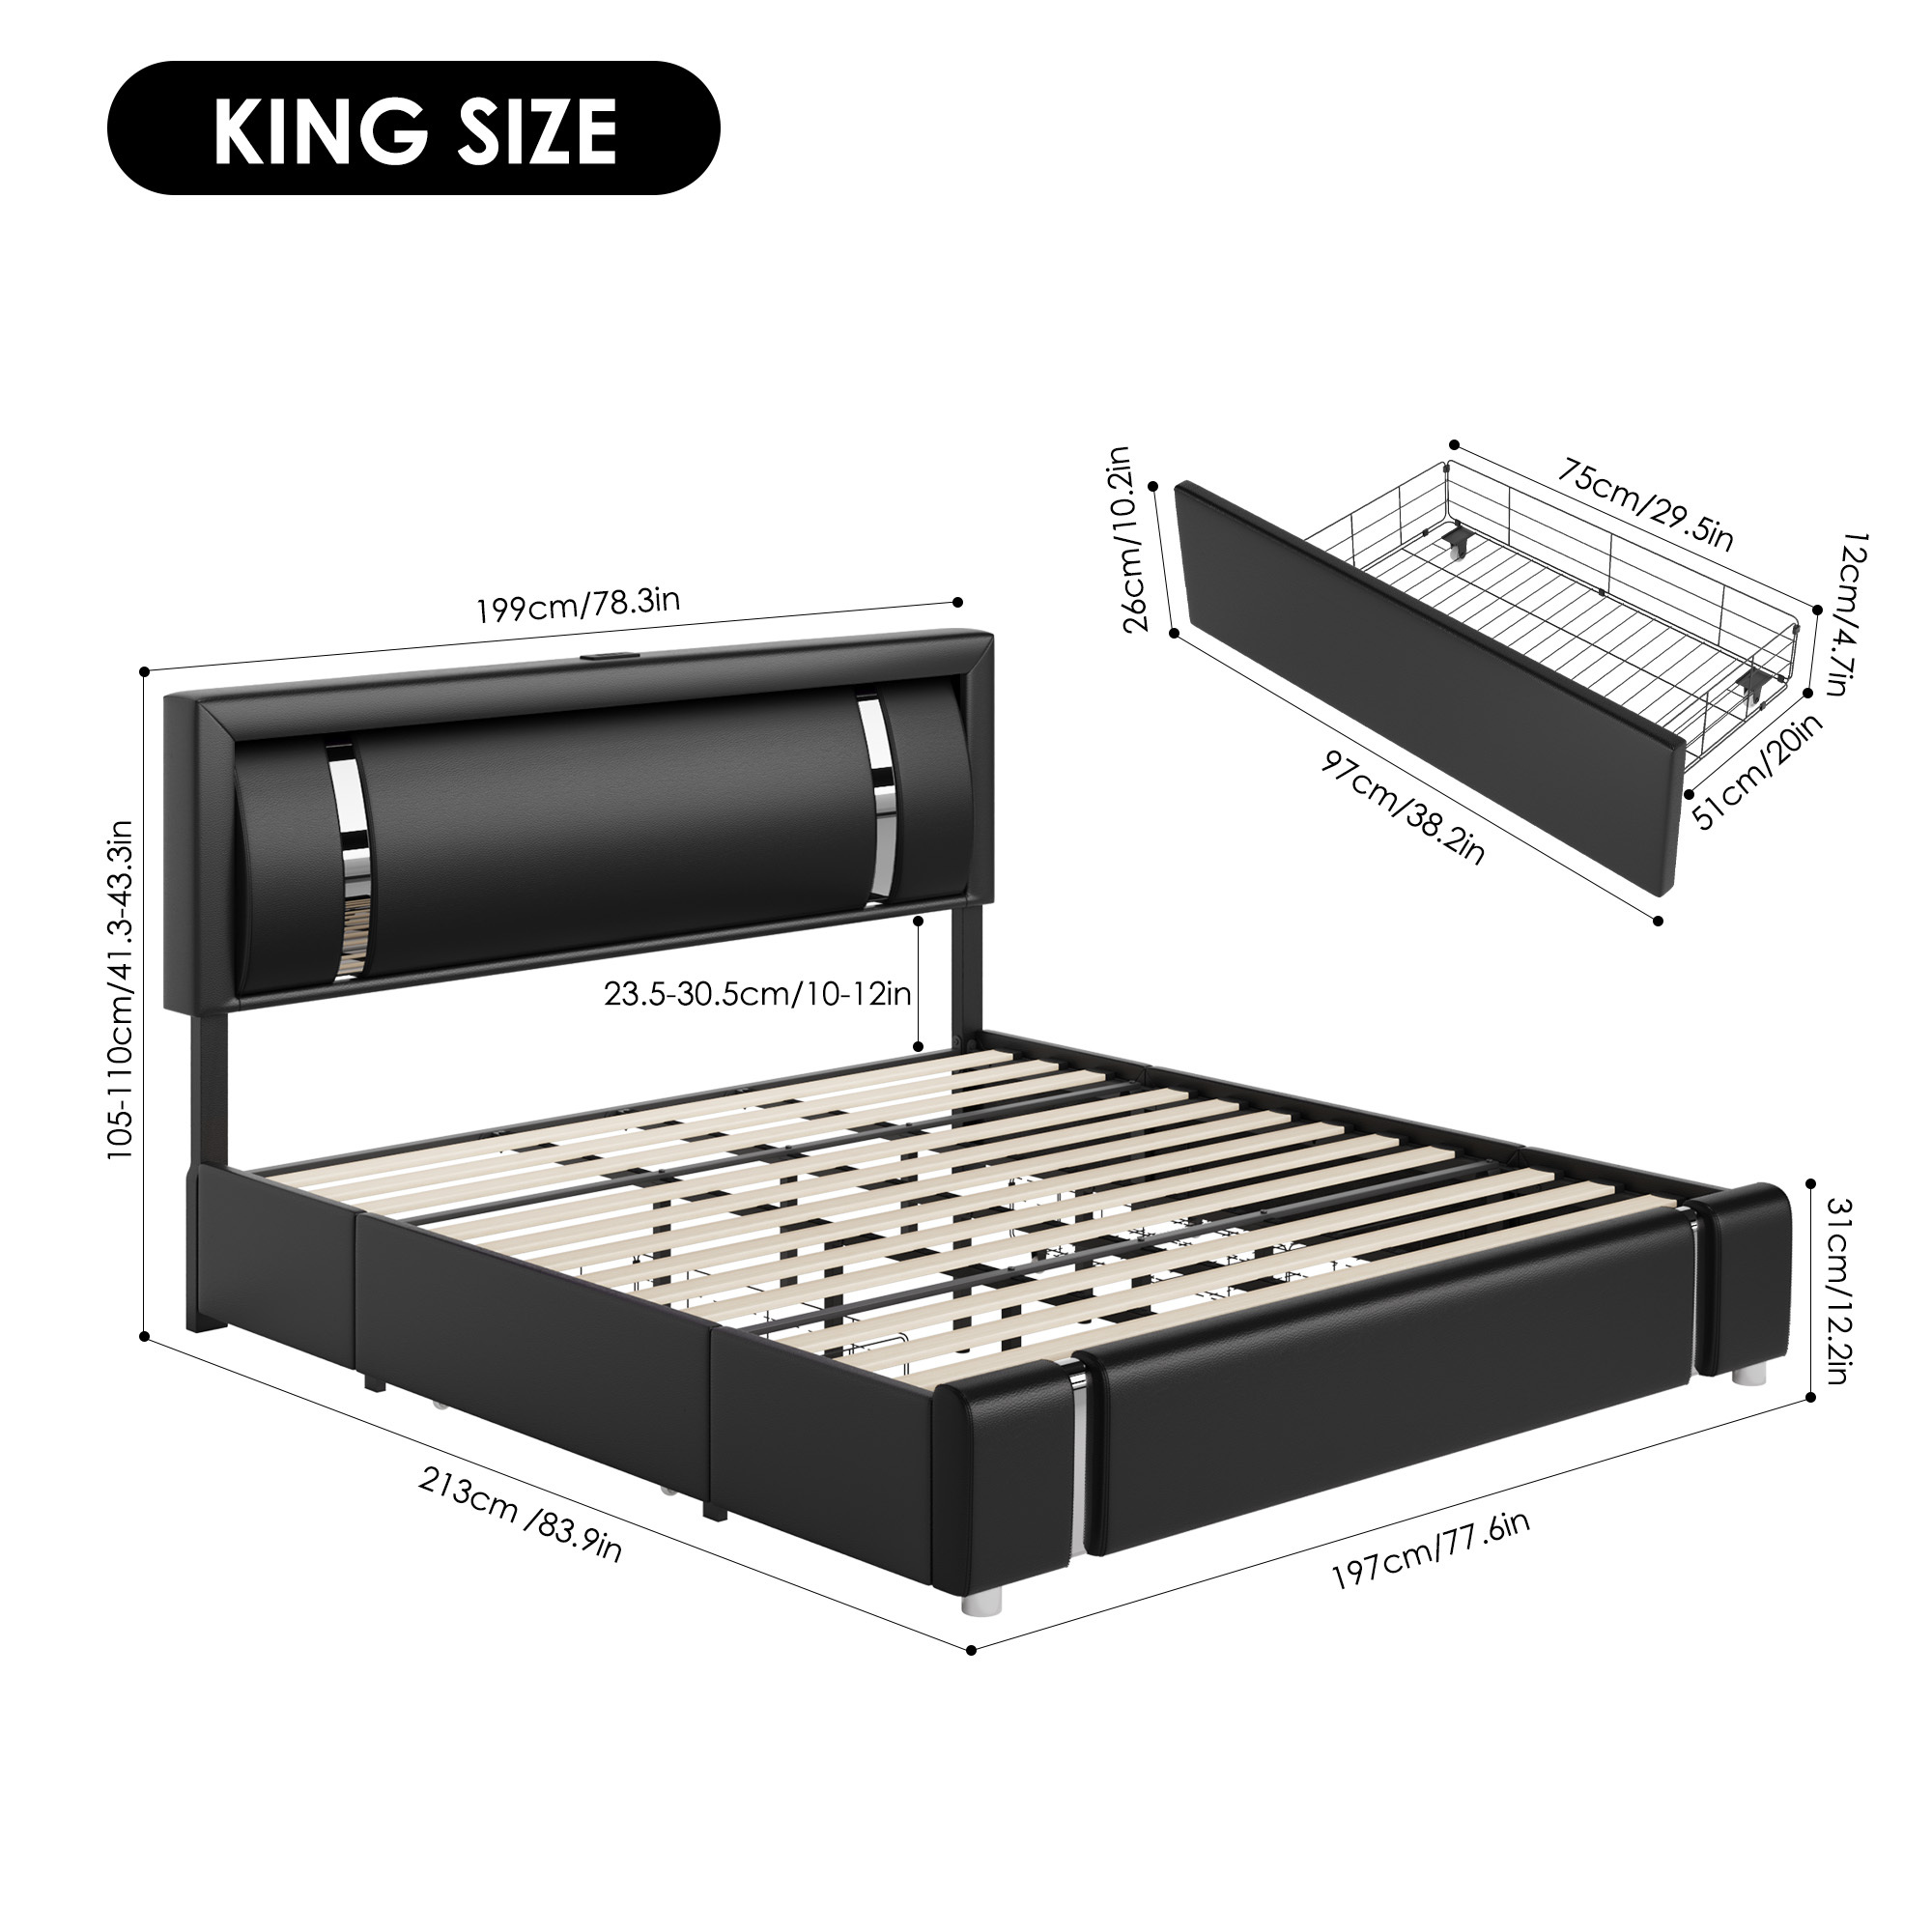 Homfa King Size LED Bed Frame with 2 Storage Drawers, Modern Leather Upholstered Platform Bed Frame with Adjustable Headboard, Black - image 4 of 11